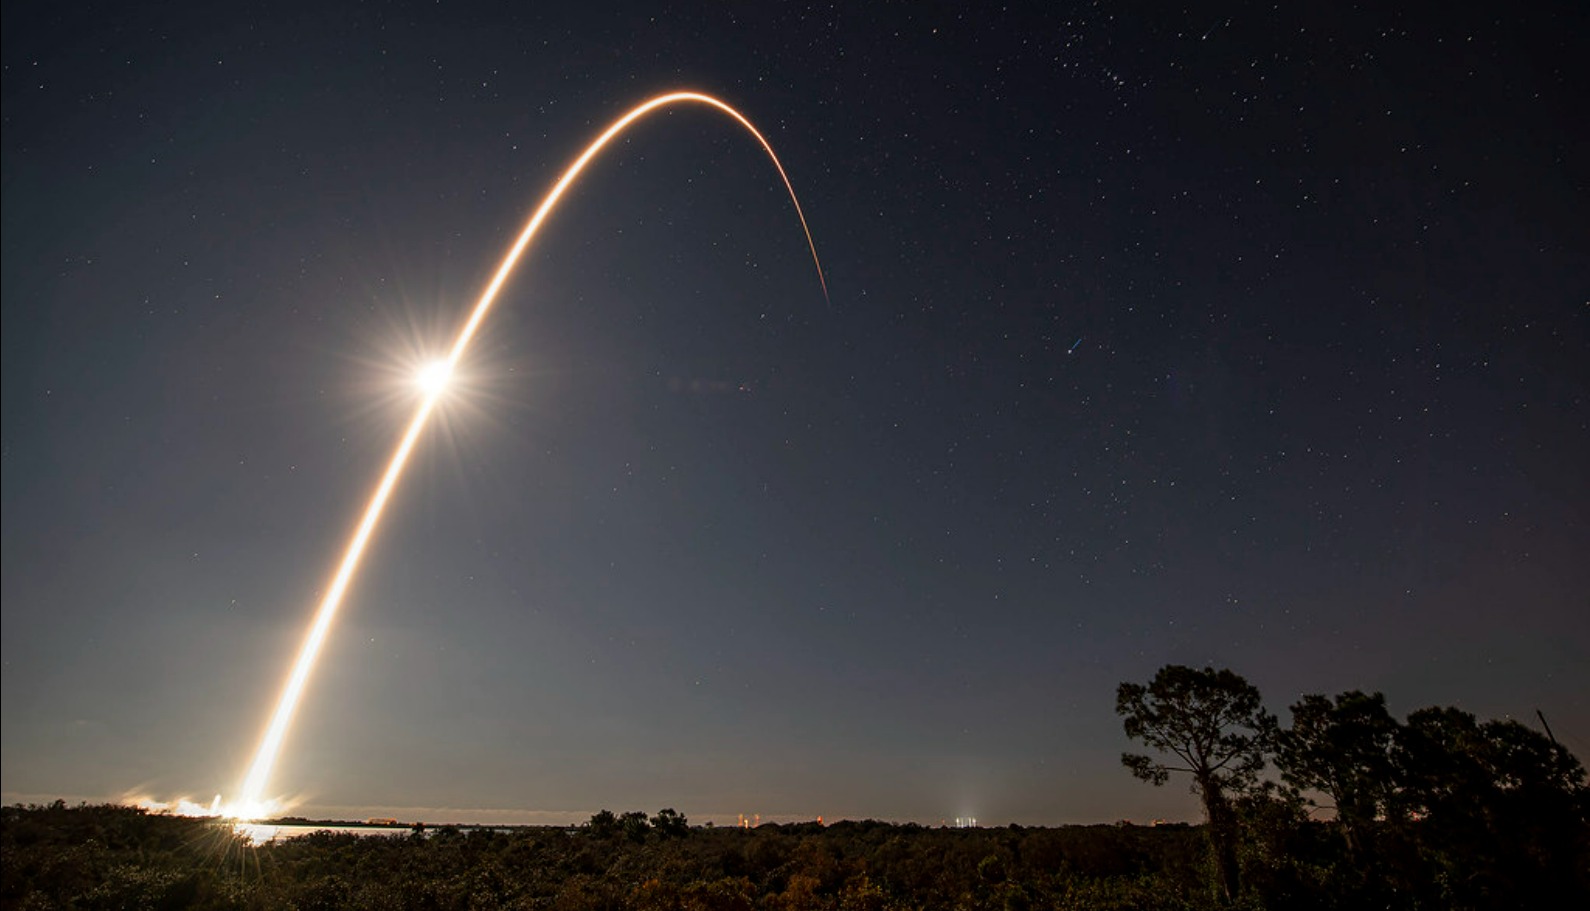 Os satélites Starlink de Elon Musk podem estar corroendo o campo magnético da Terra